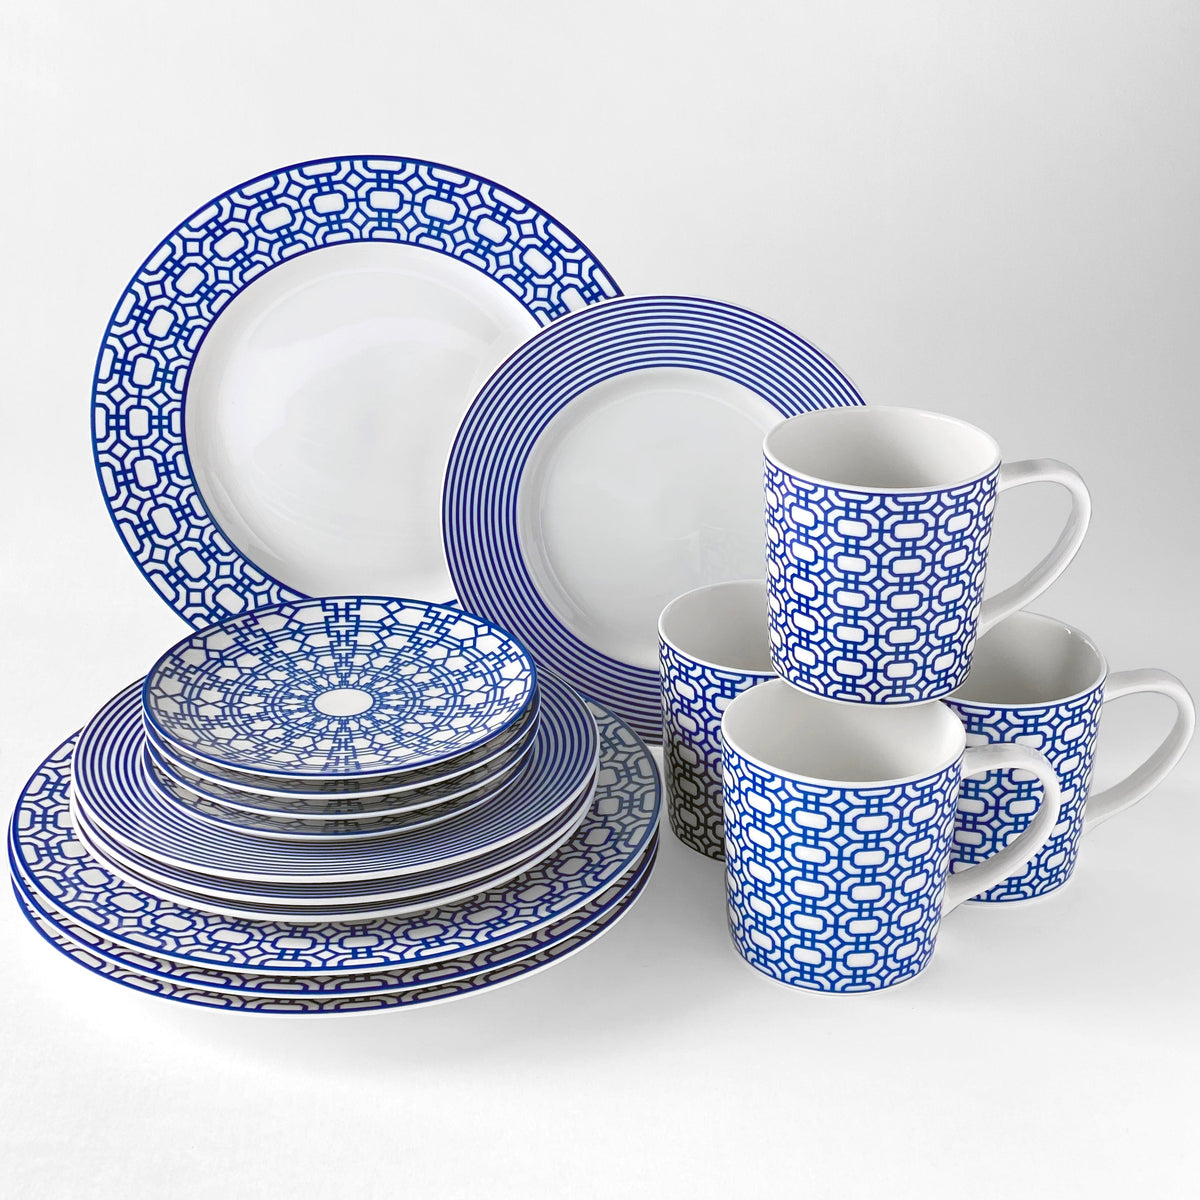 A Newport Garden Gate Blue Rimmed Dinner Plate set on a creamy white surface made of premium porcelain from Caskata Artisanal Home.